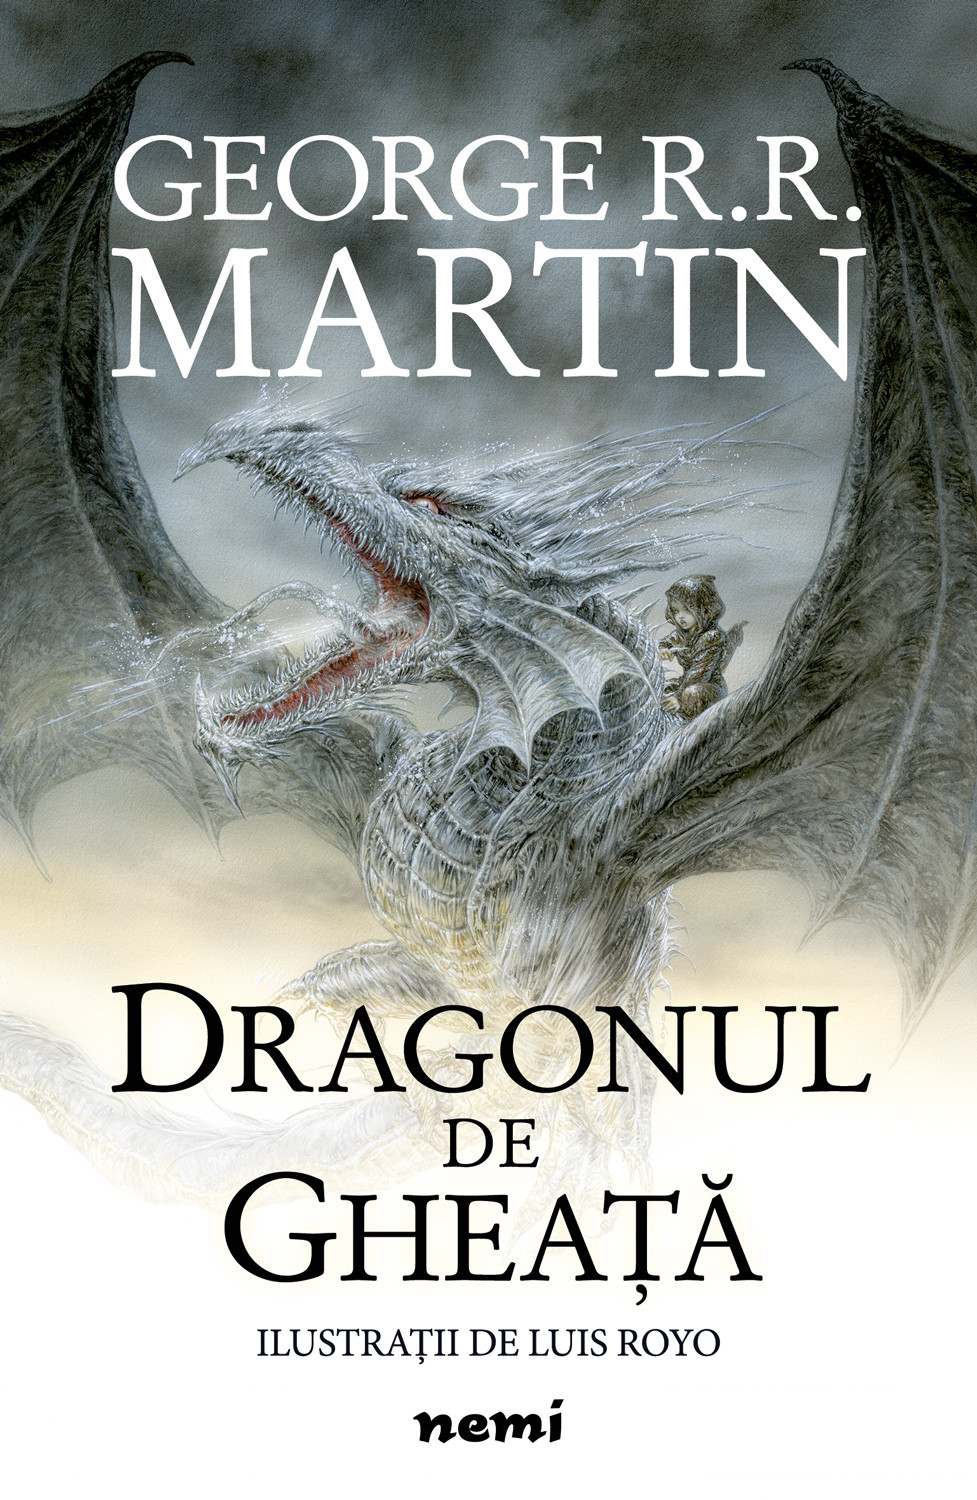 georgerrmartin-dragonul-de-gheata_hc_c1